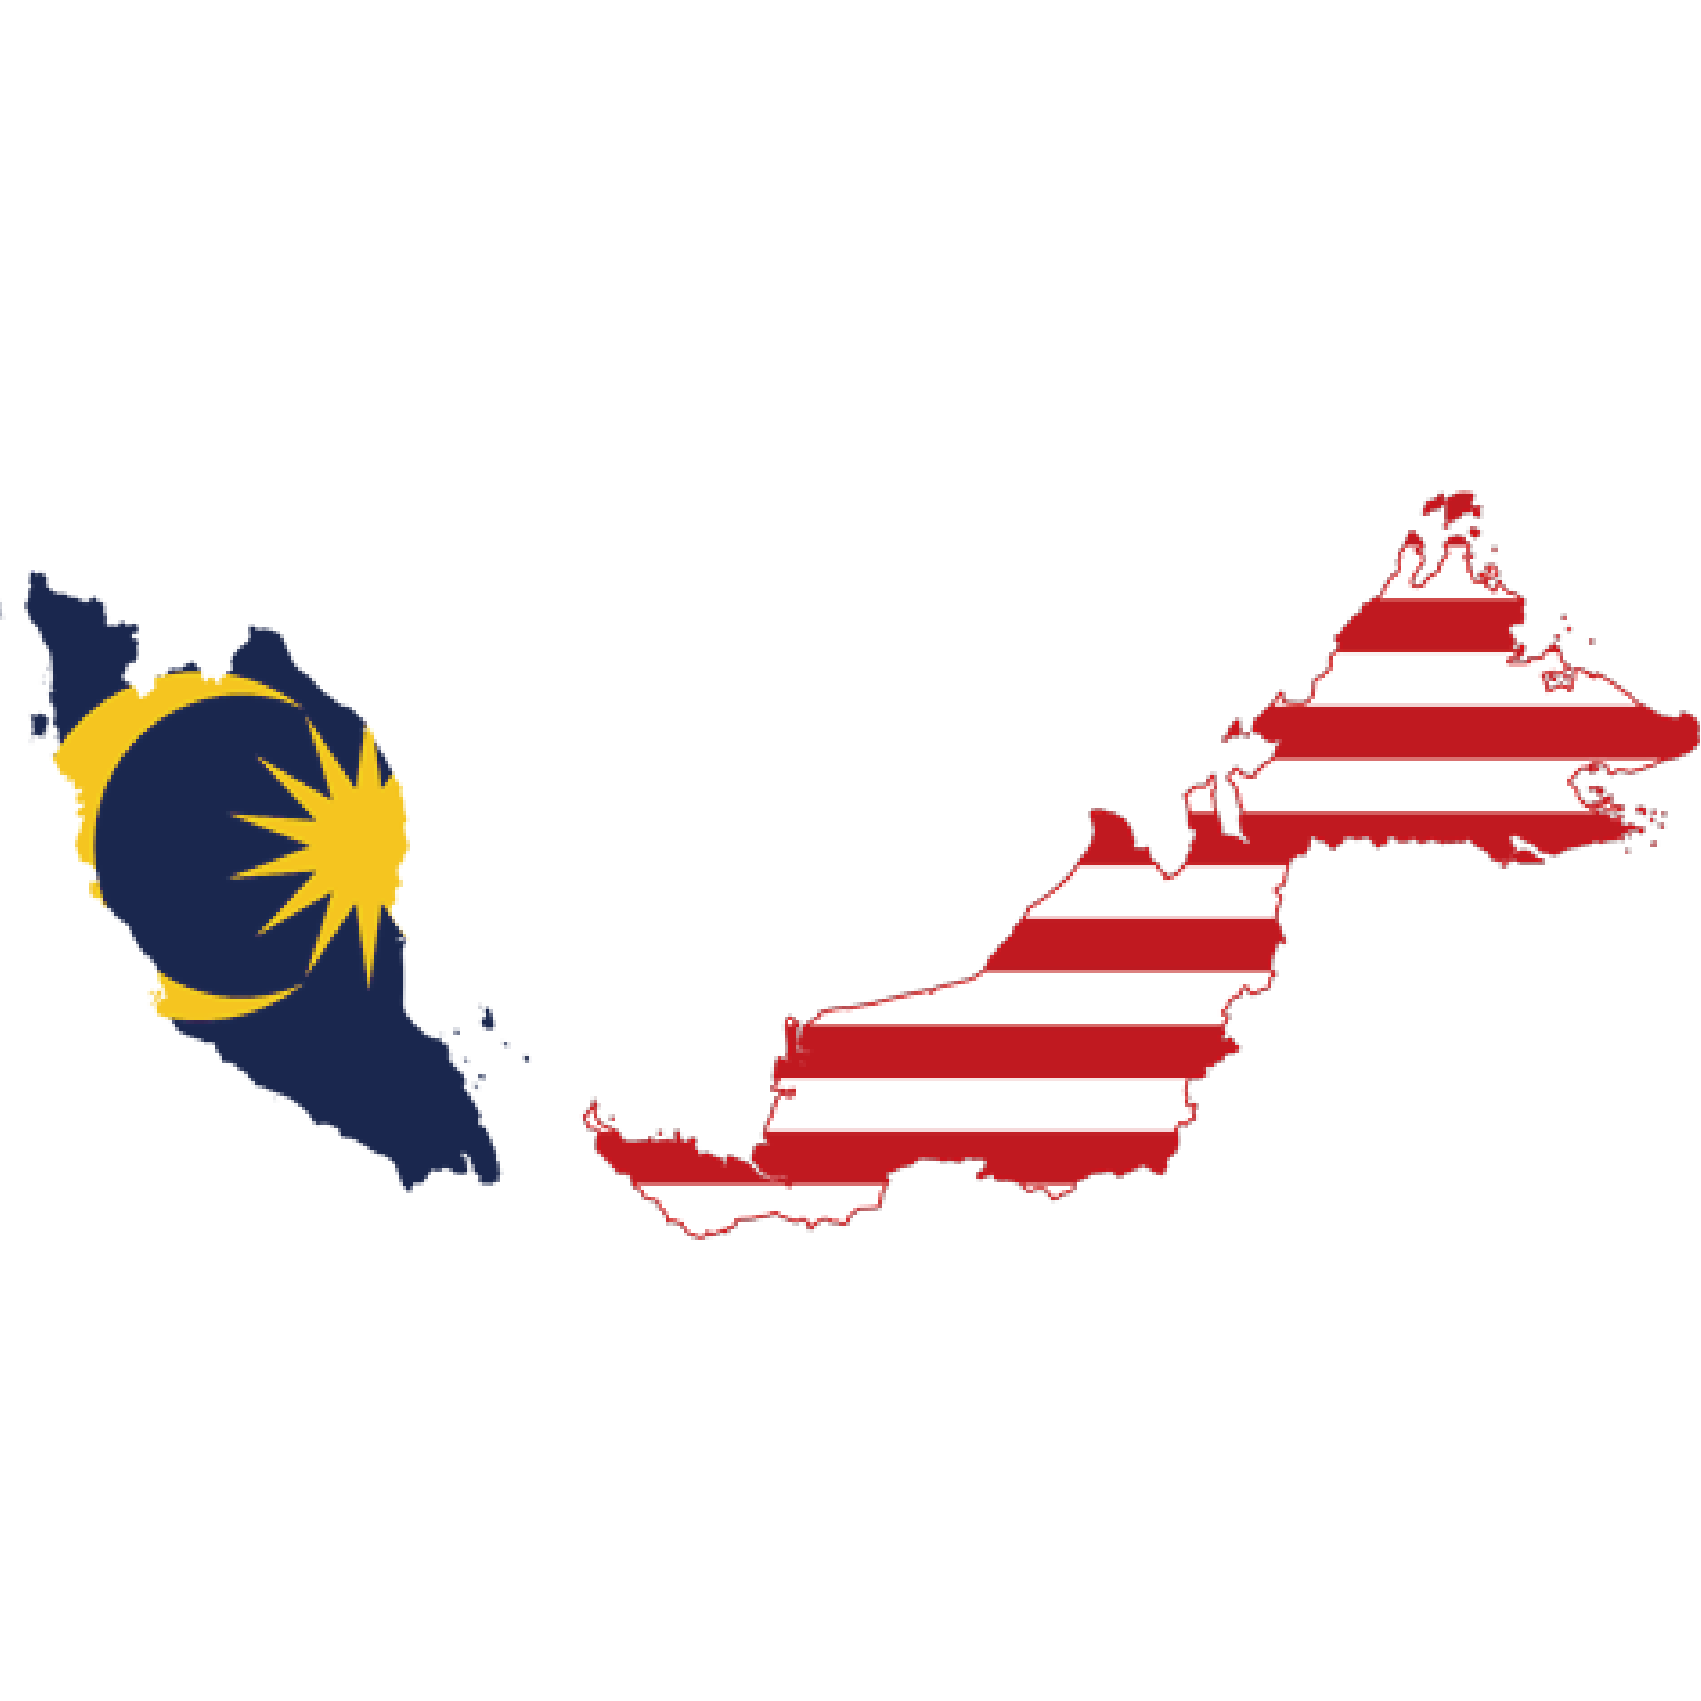 
Flag of Malaysia, the partner of barskorea.